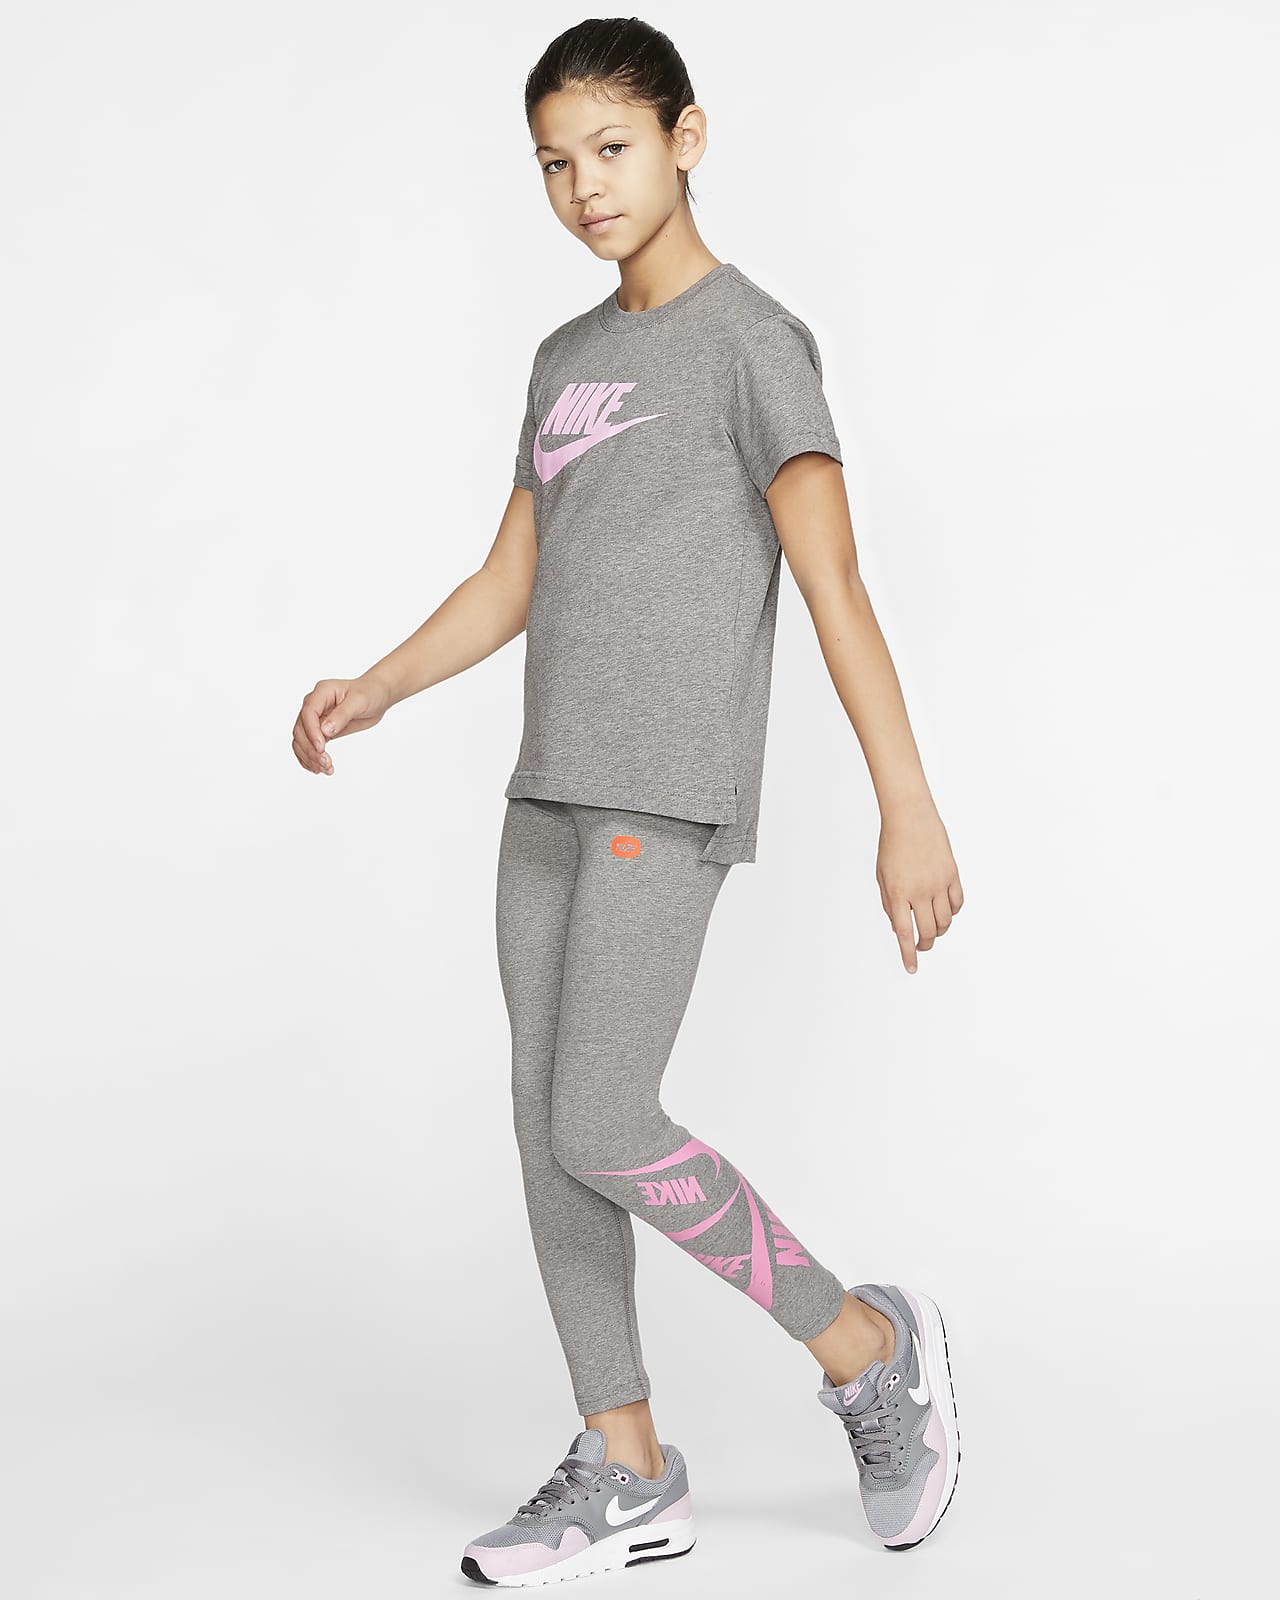 Big Nike Leggings. Sportswear (Girls\') Kids\'